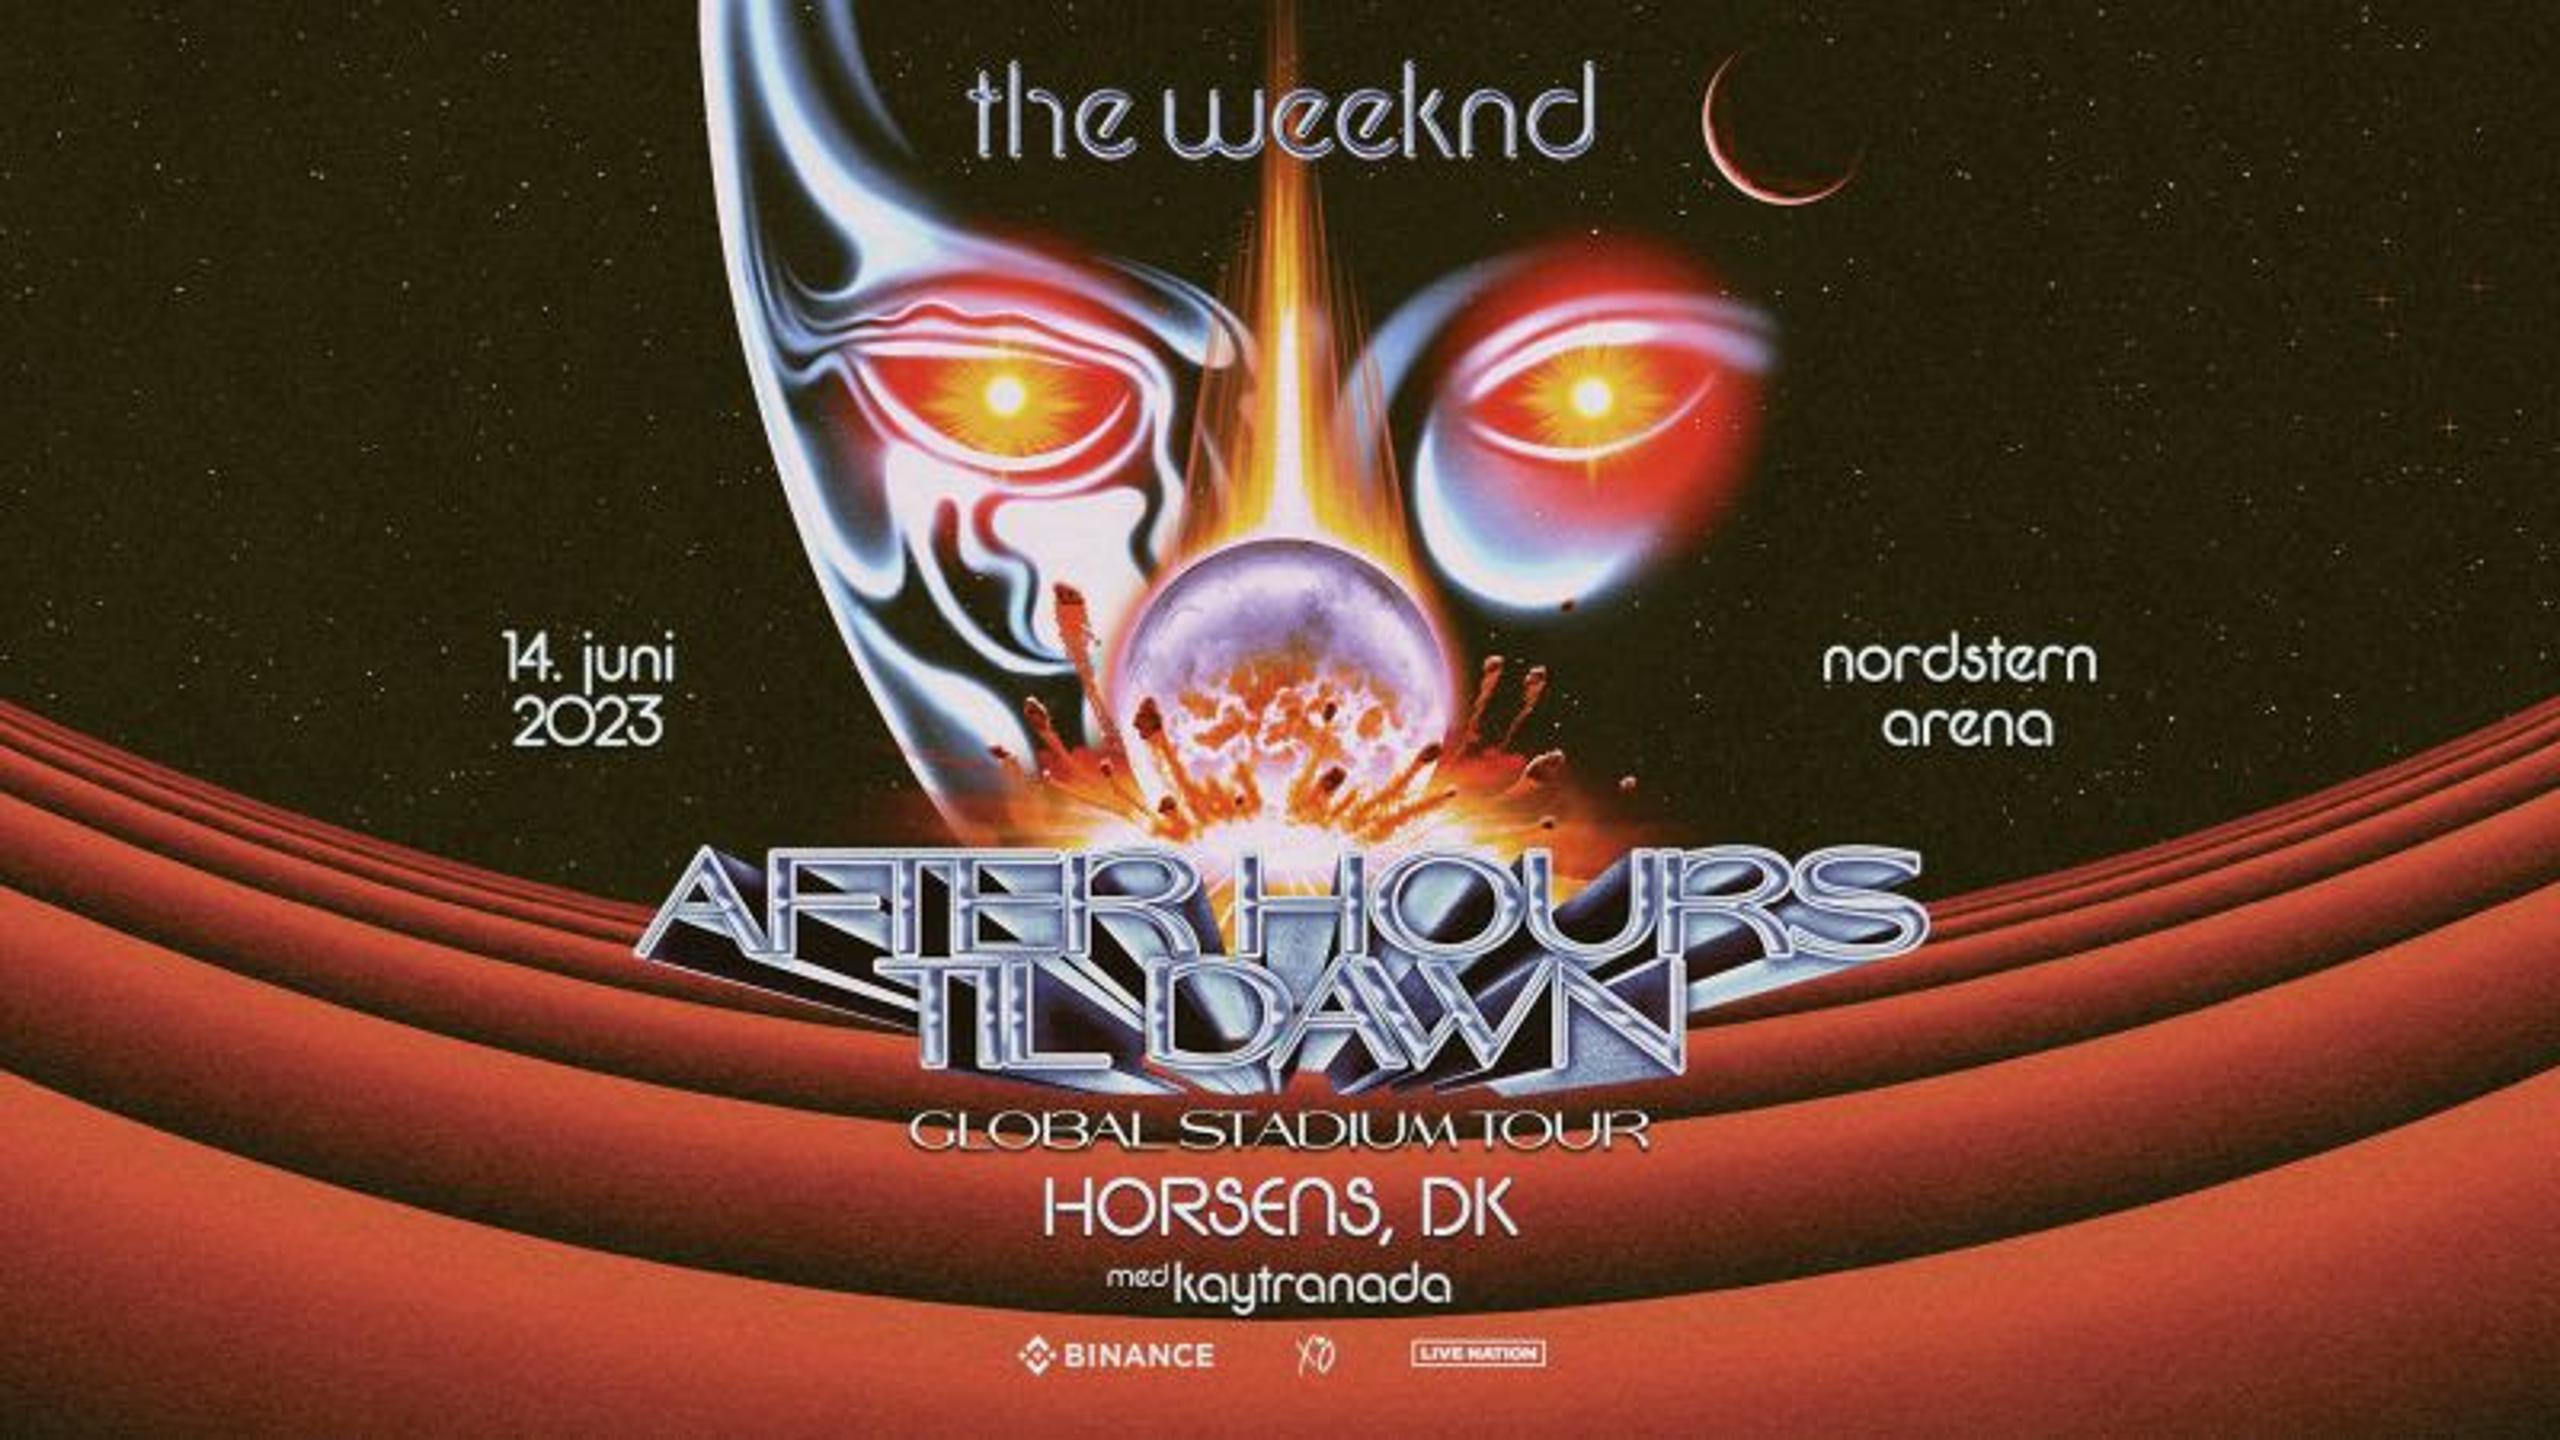 The Weeknd, Kaytranada concert tickets for Casa Arena, Horsens